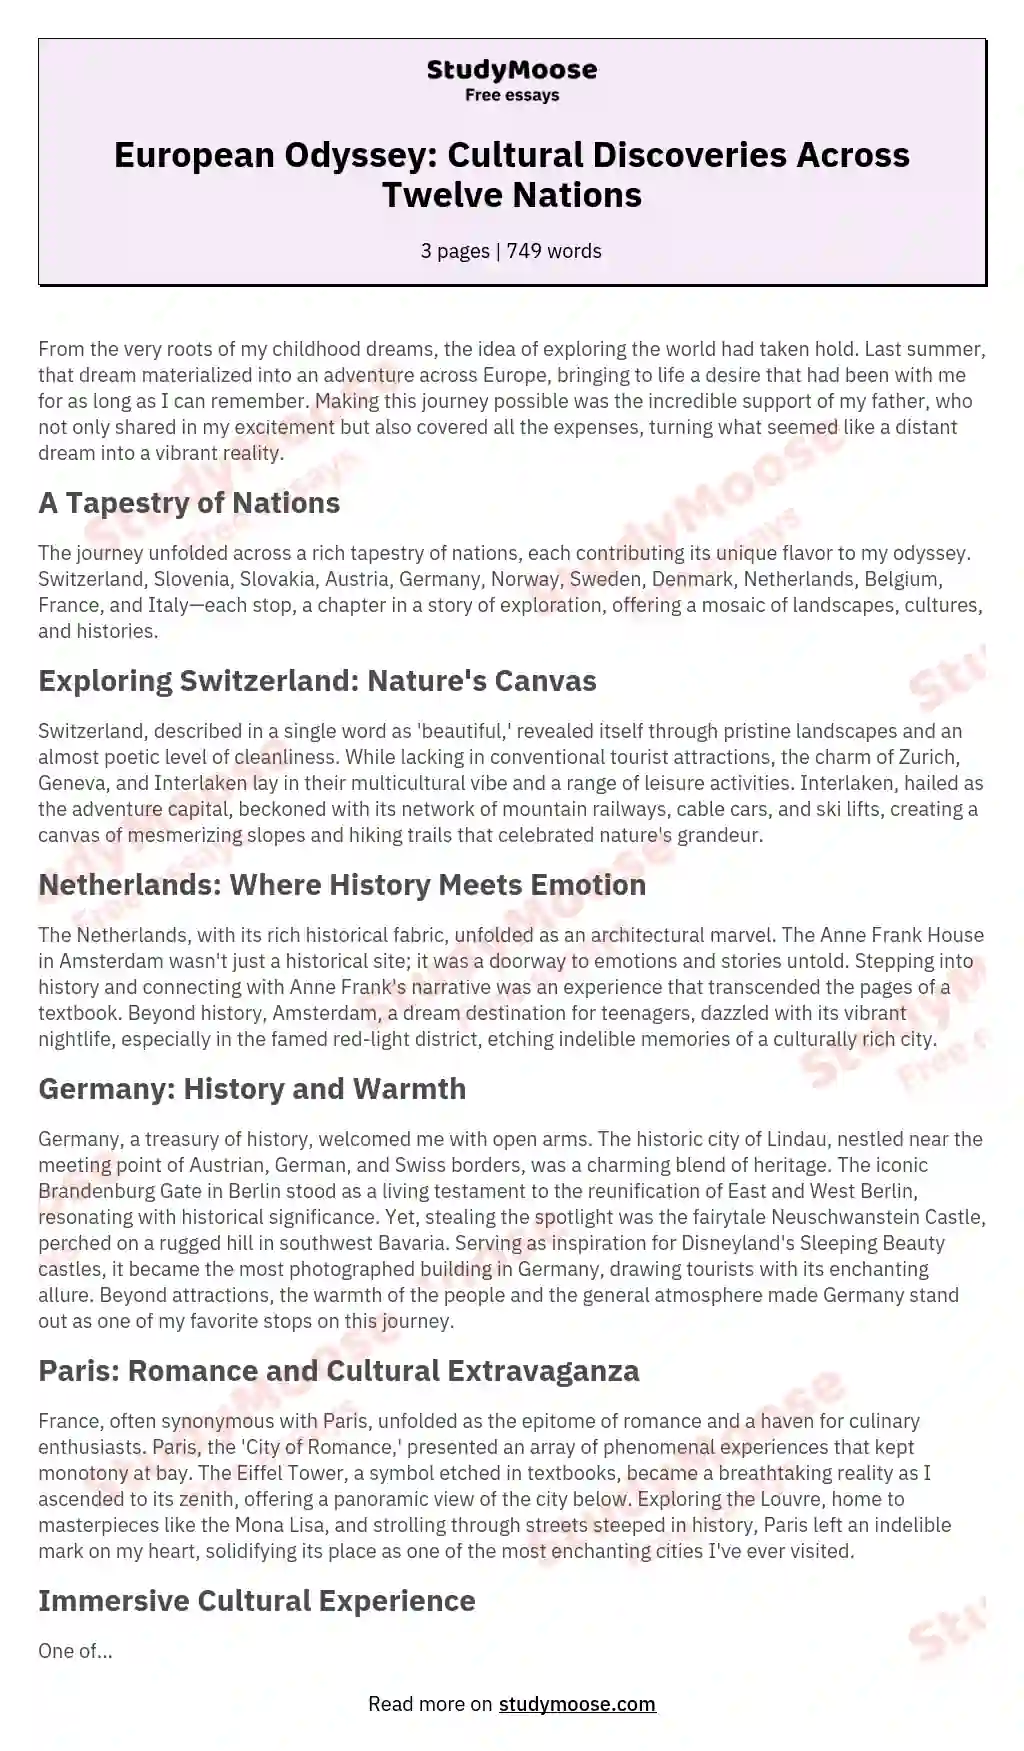 European Odyssey: Cultural Discoveries Across Twelve Nations essay